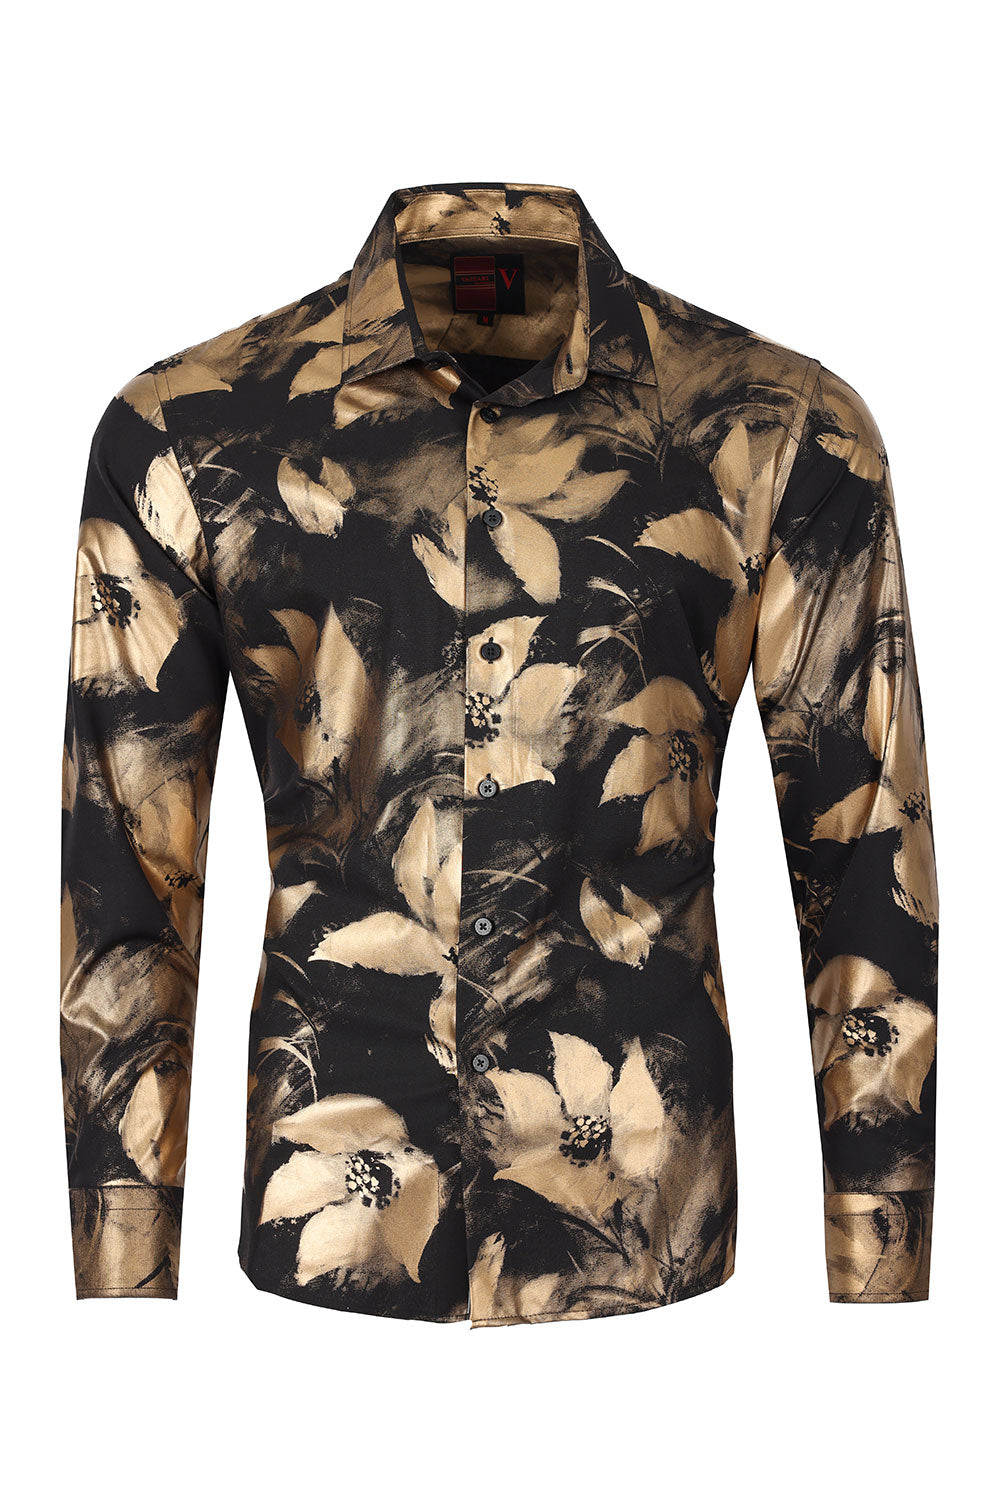 Barabas Men's Floral Print Design Button Down Luxury Shirts 2VS149 Black